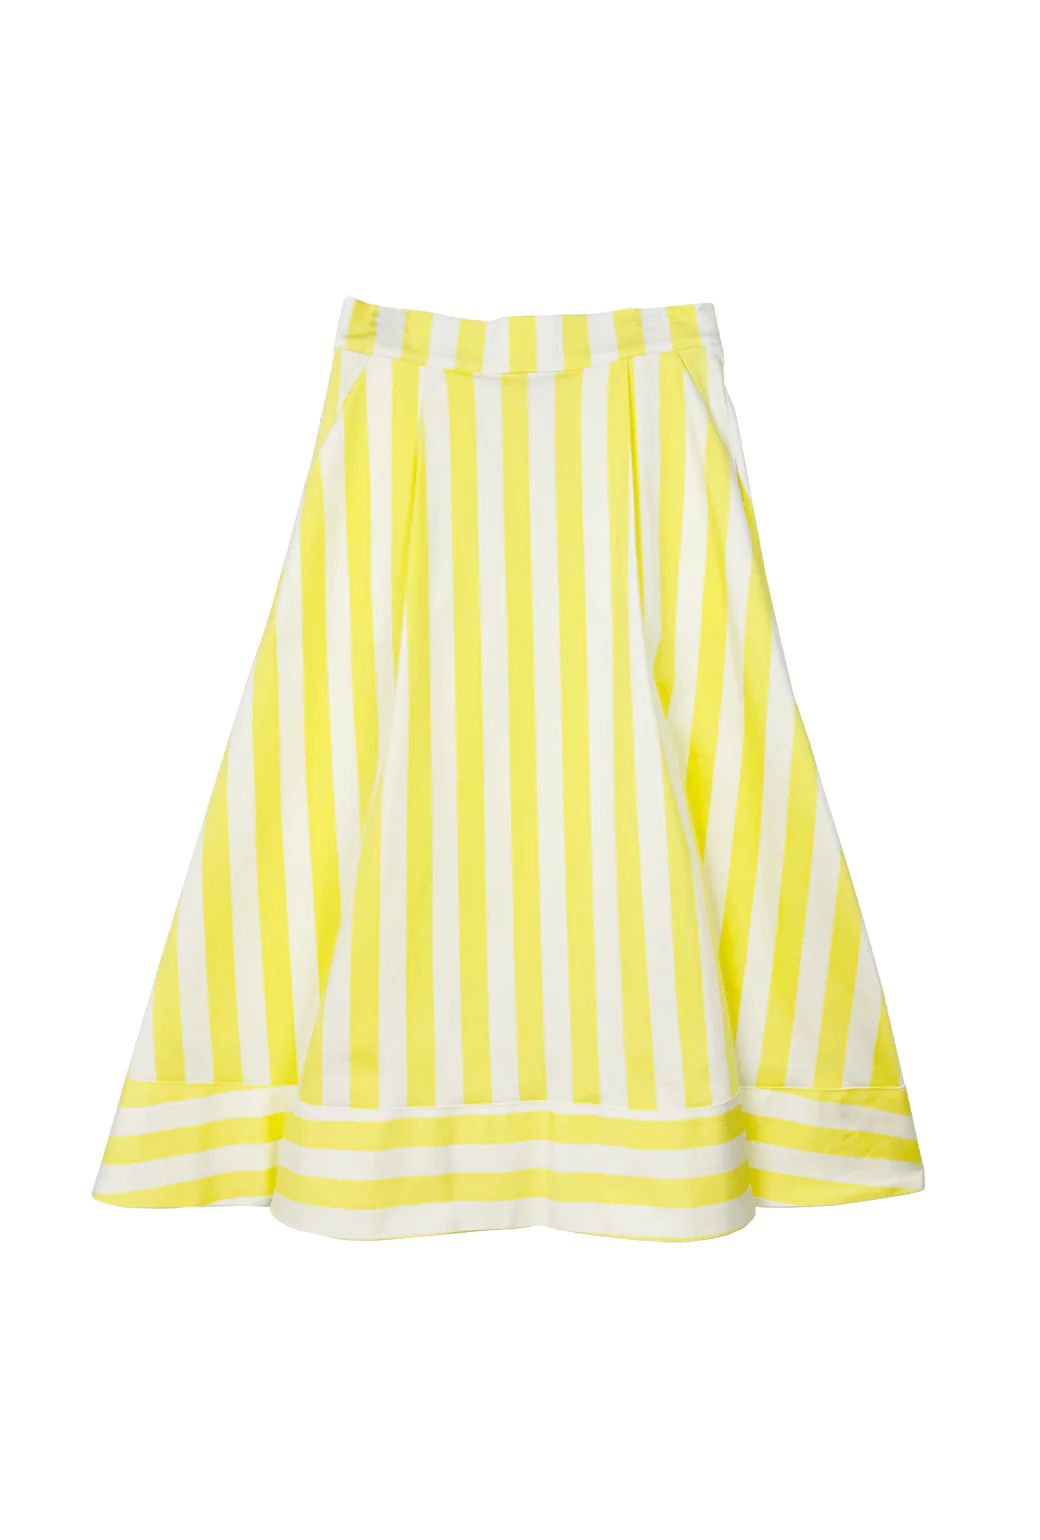 Buru X Kelly Golightly Flat Front Everyday Skirt - Citron Stripe | Shop BURU